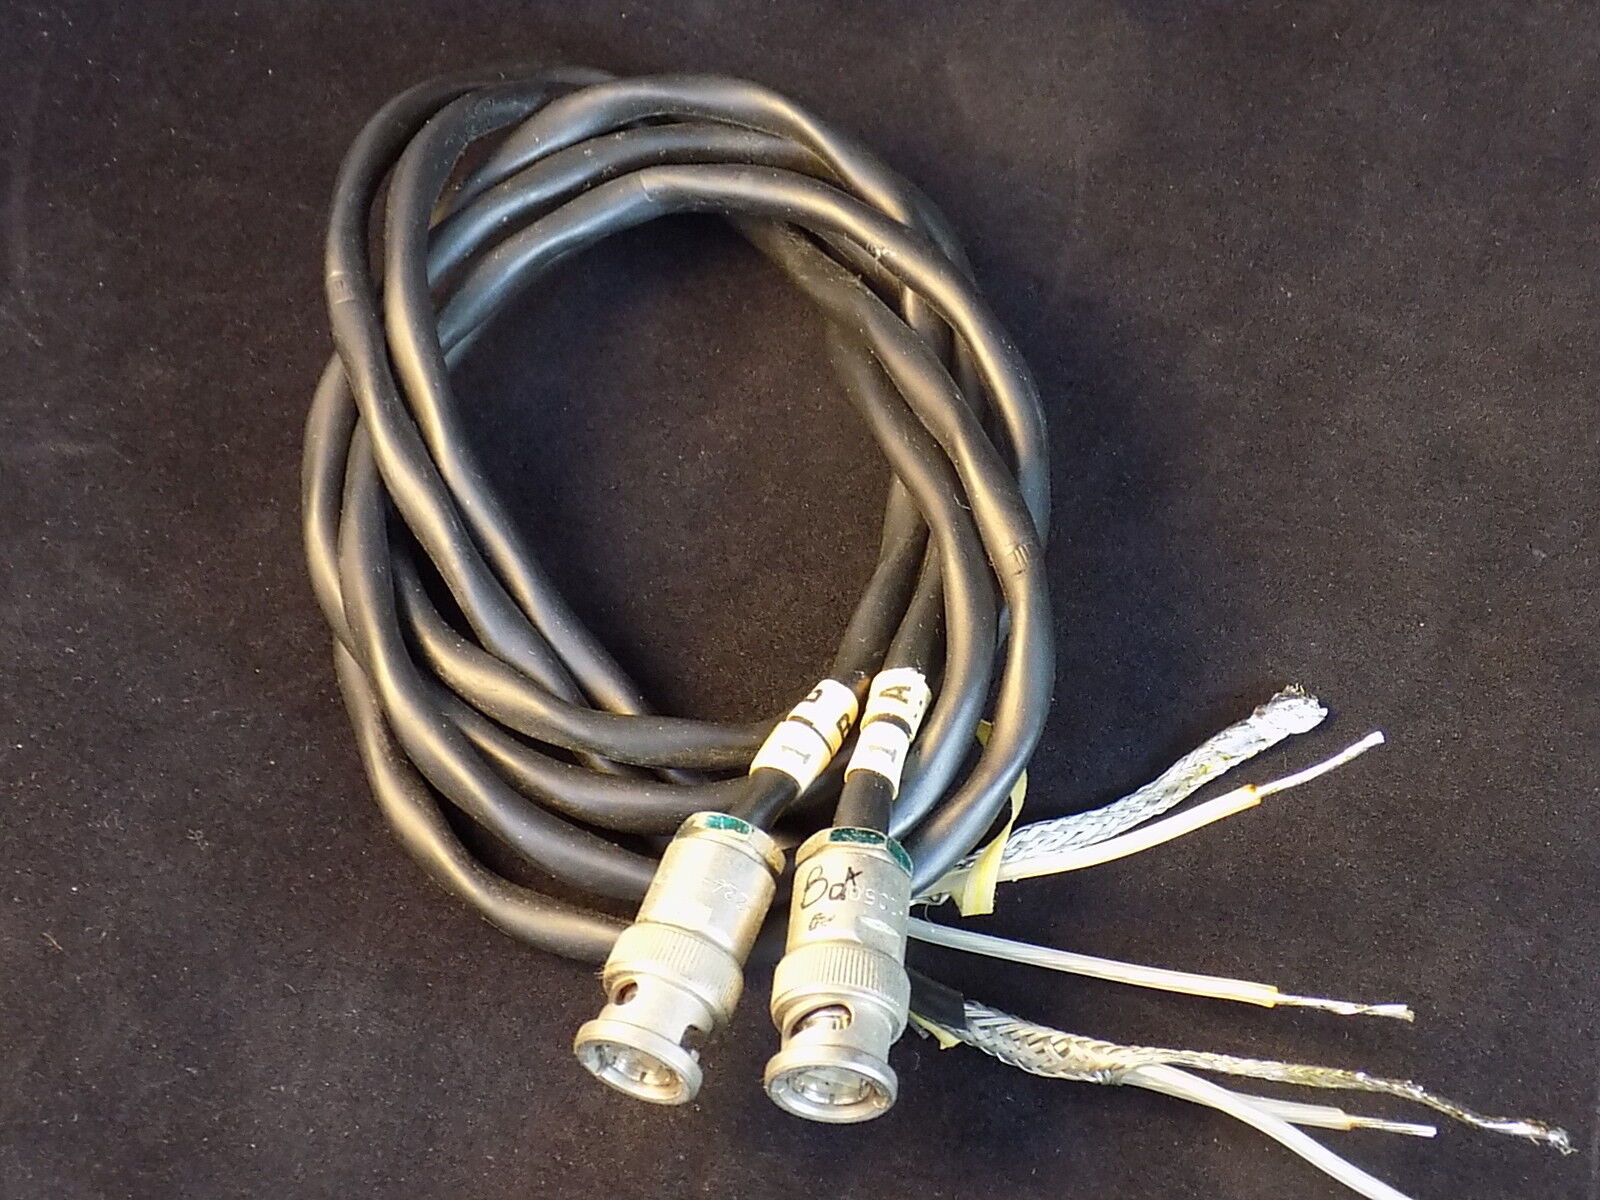 SET of 2 AMPHENOL 2 PIN TWIST LOCK CONNECTORS 31-224-1050 w/ 3 foot cords